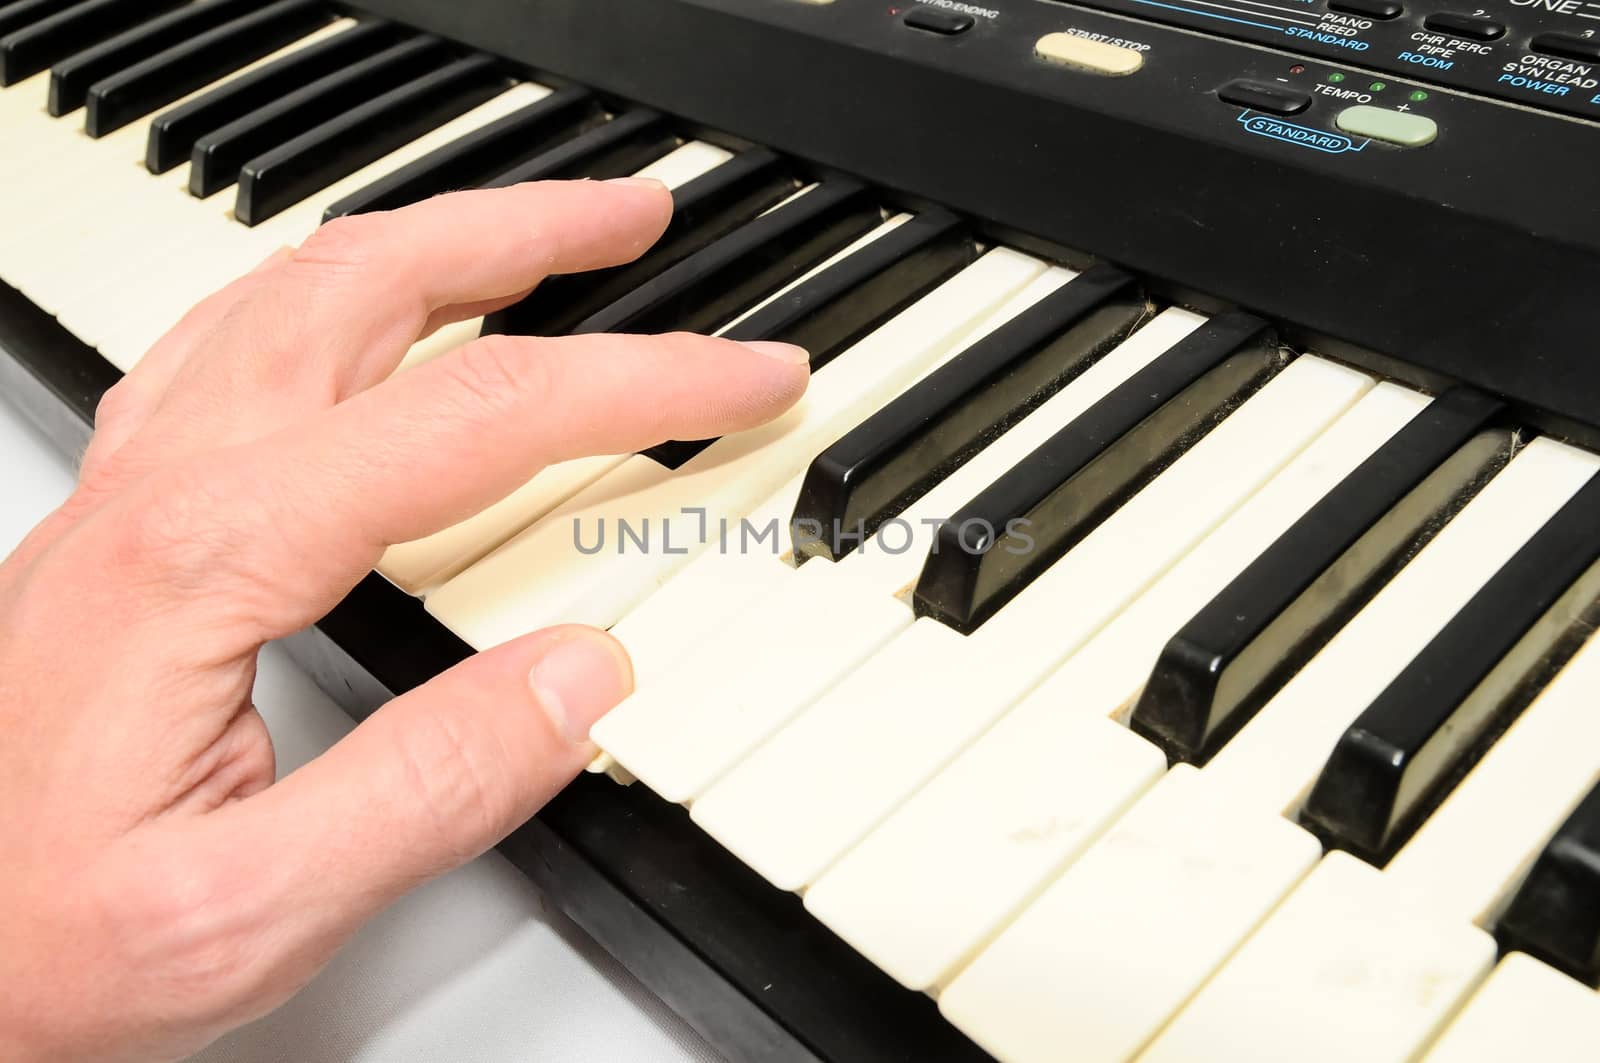 Black and White Digital Piano keyboard closeup